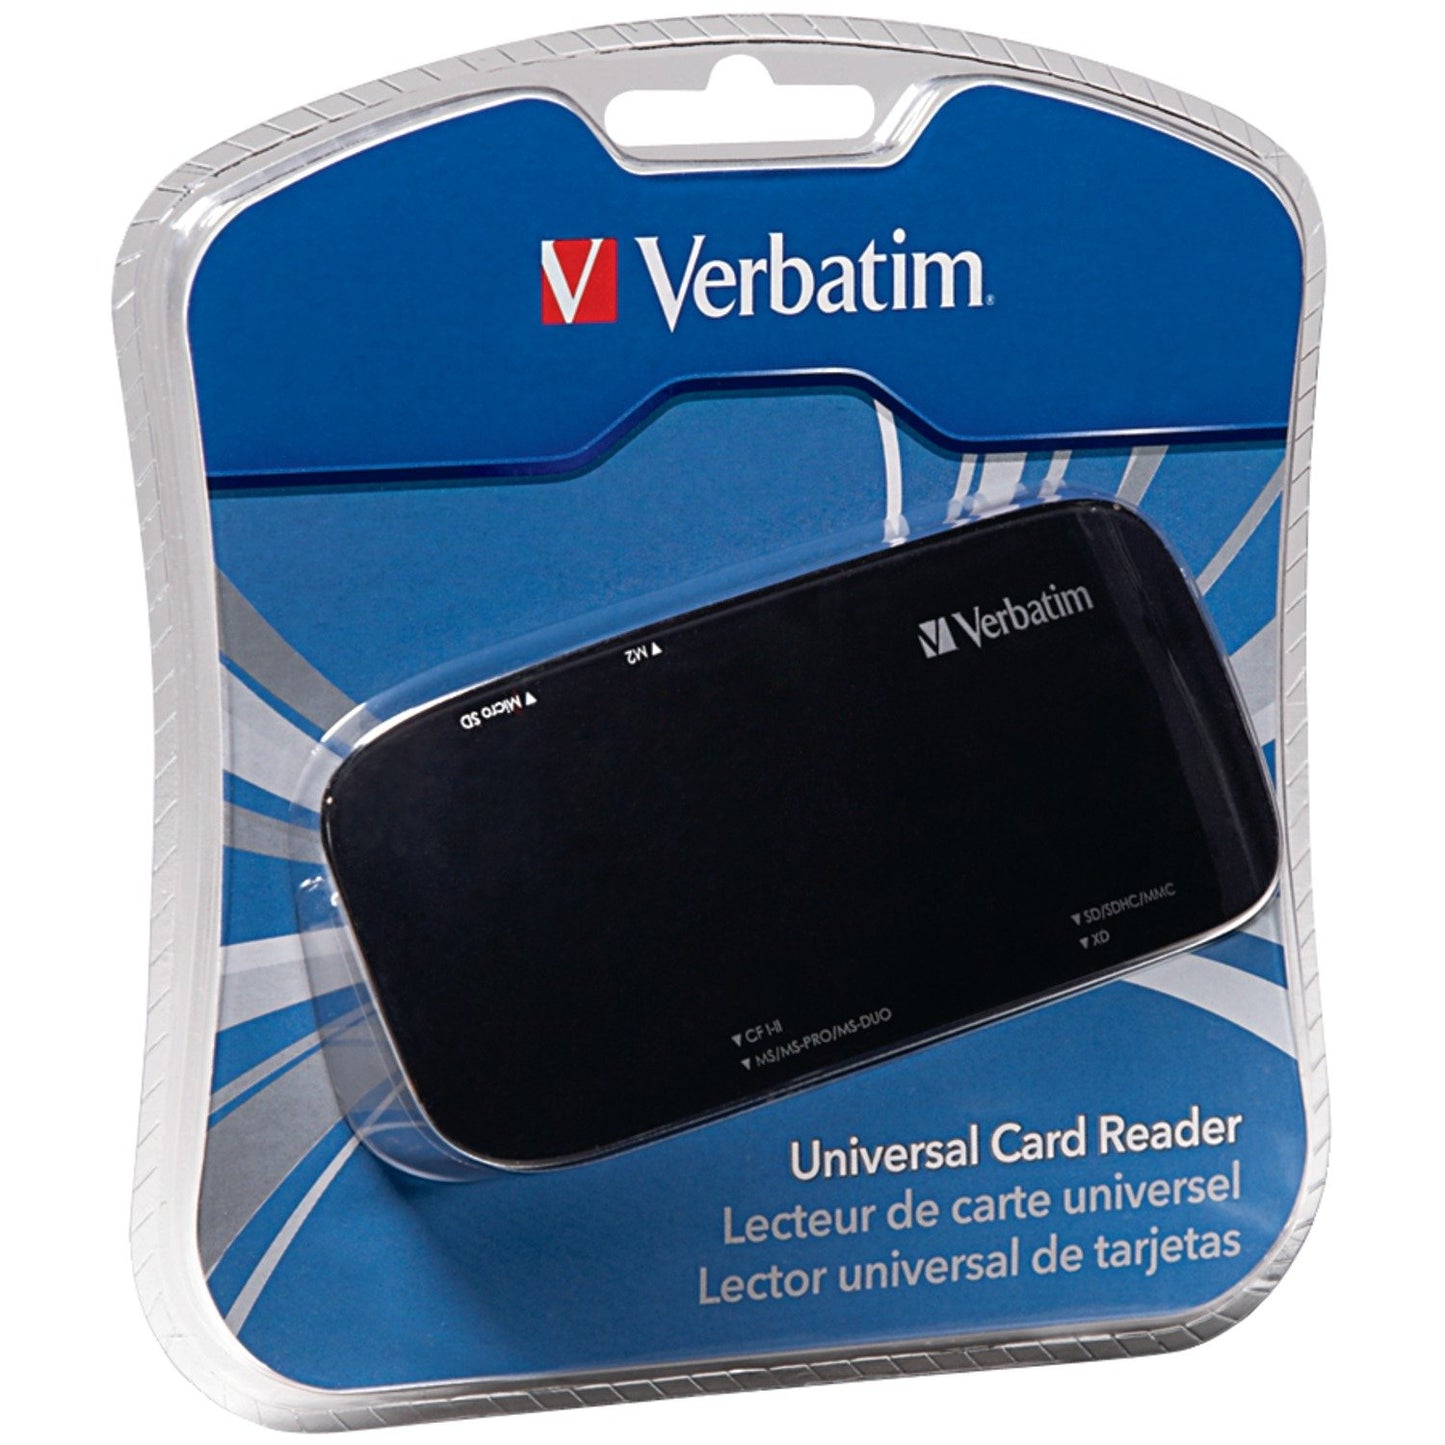 Verbatim 97705 USB 2.0 Universal Card Reader